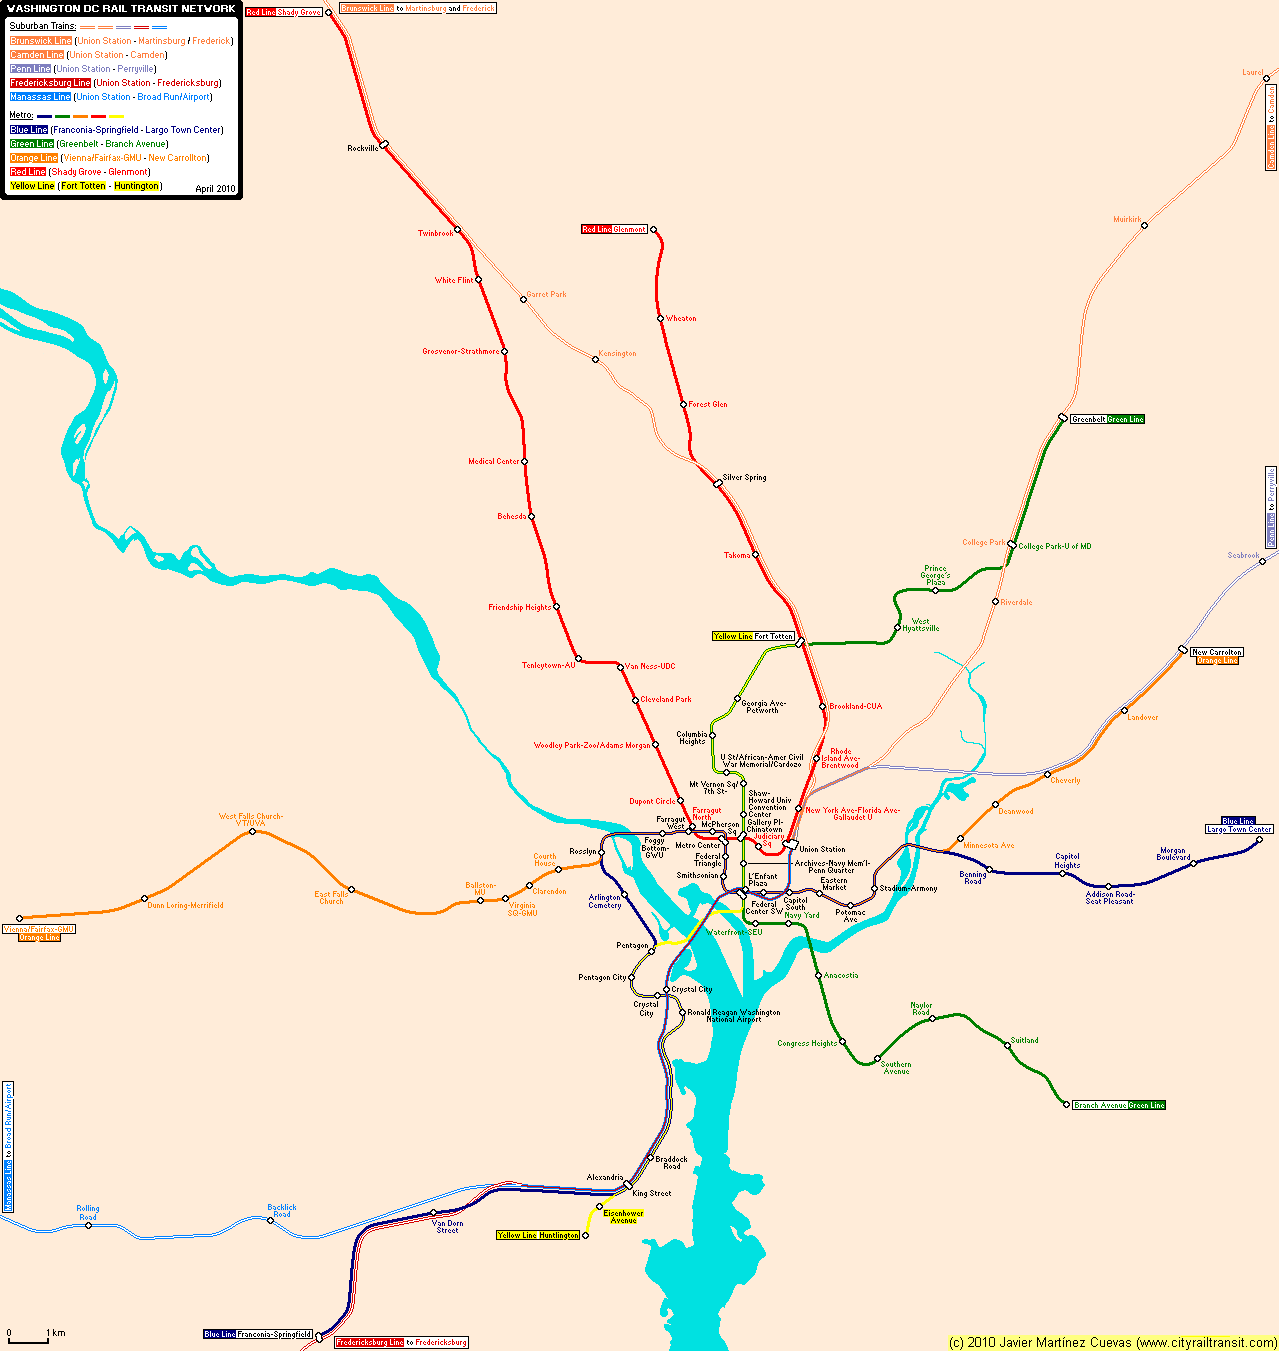 City Transit Map of Washington, DC